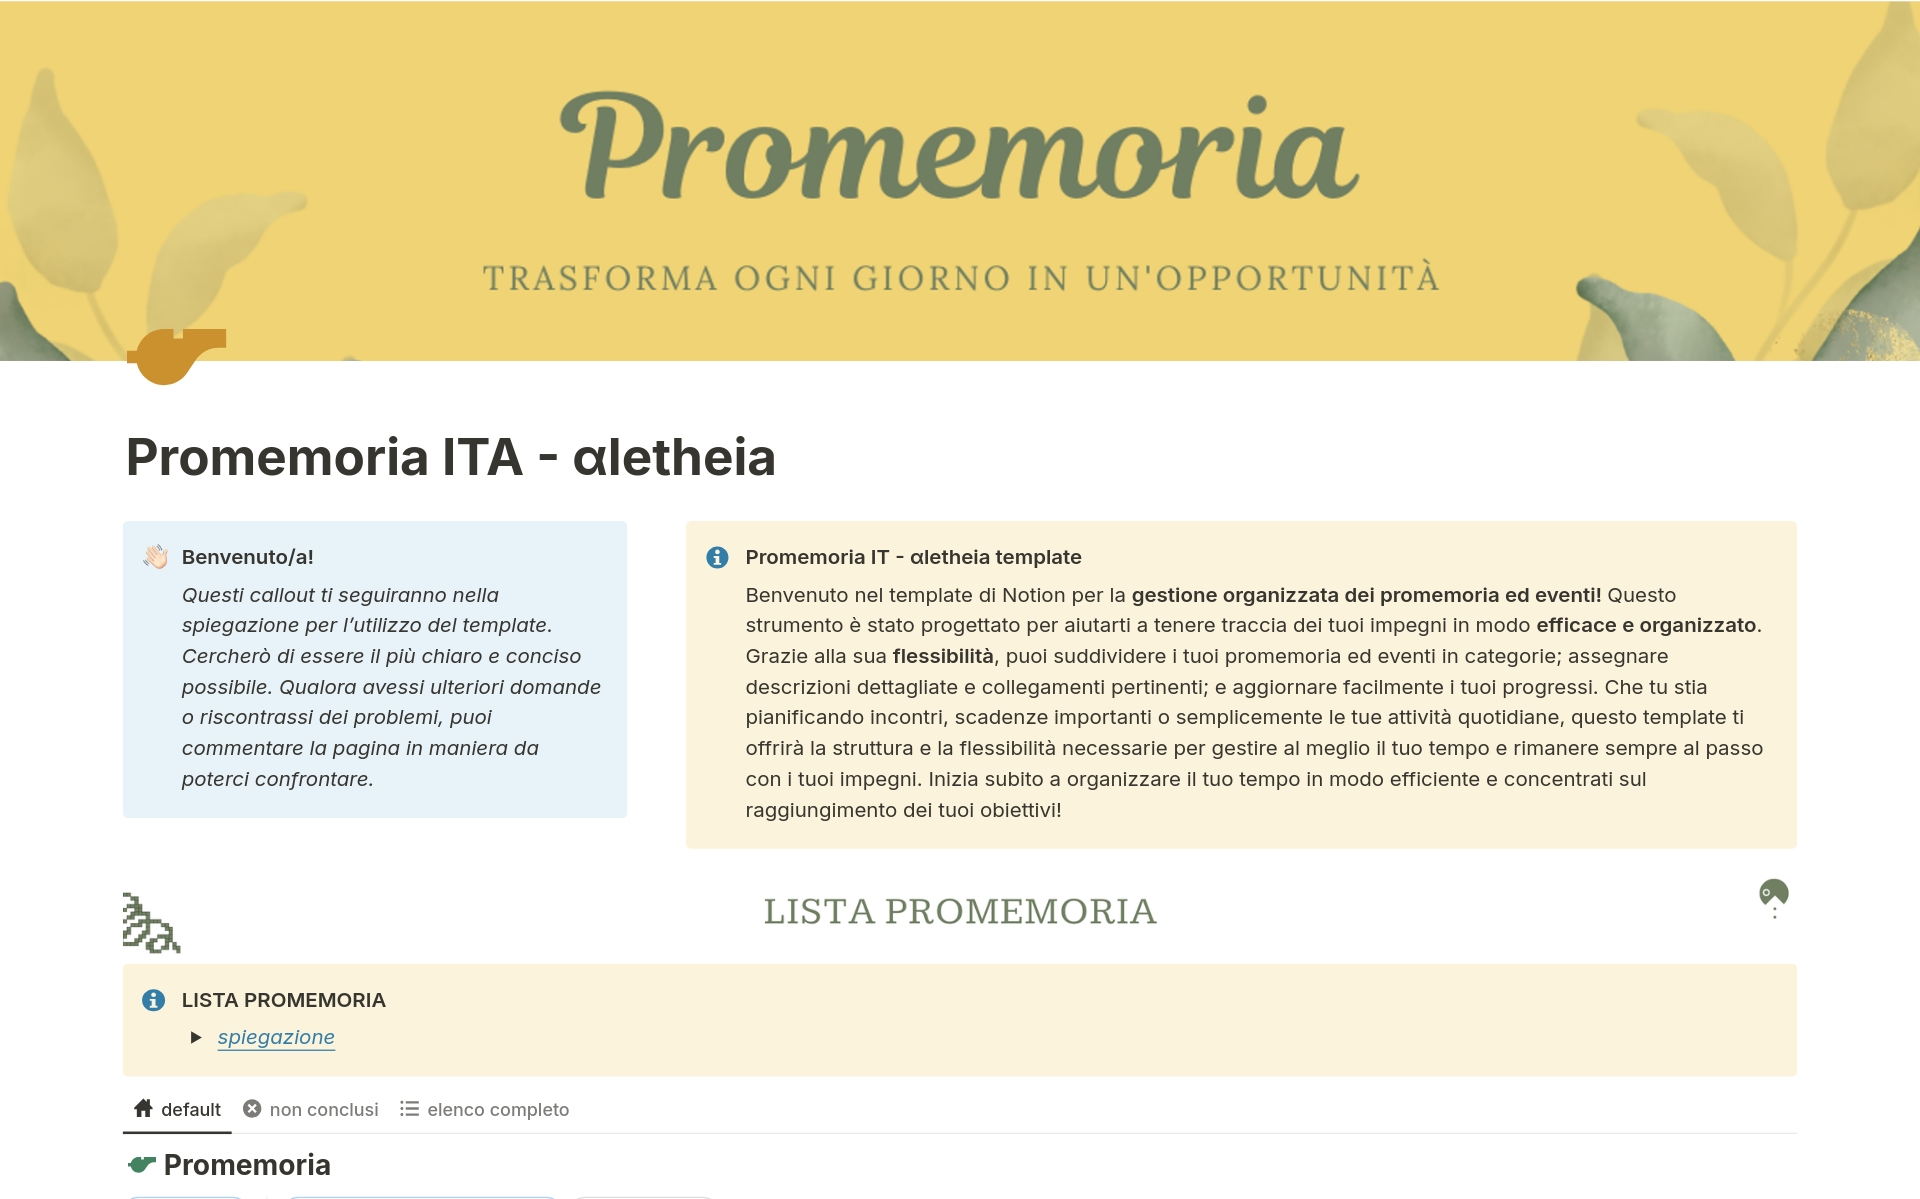 A template preview for Promemoria ITA - αletheia